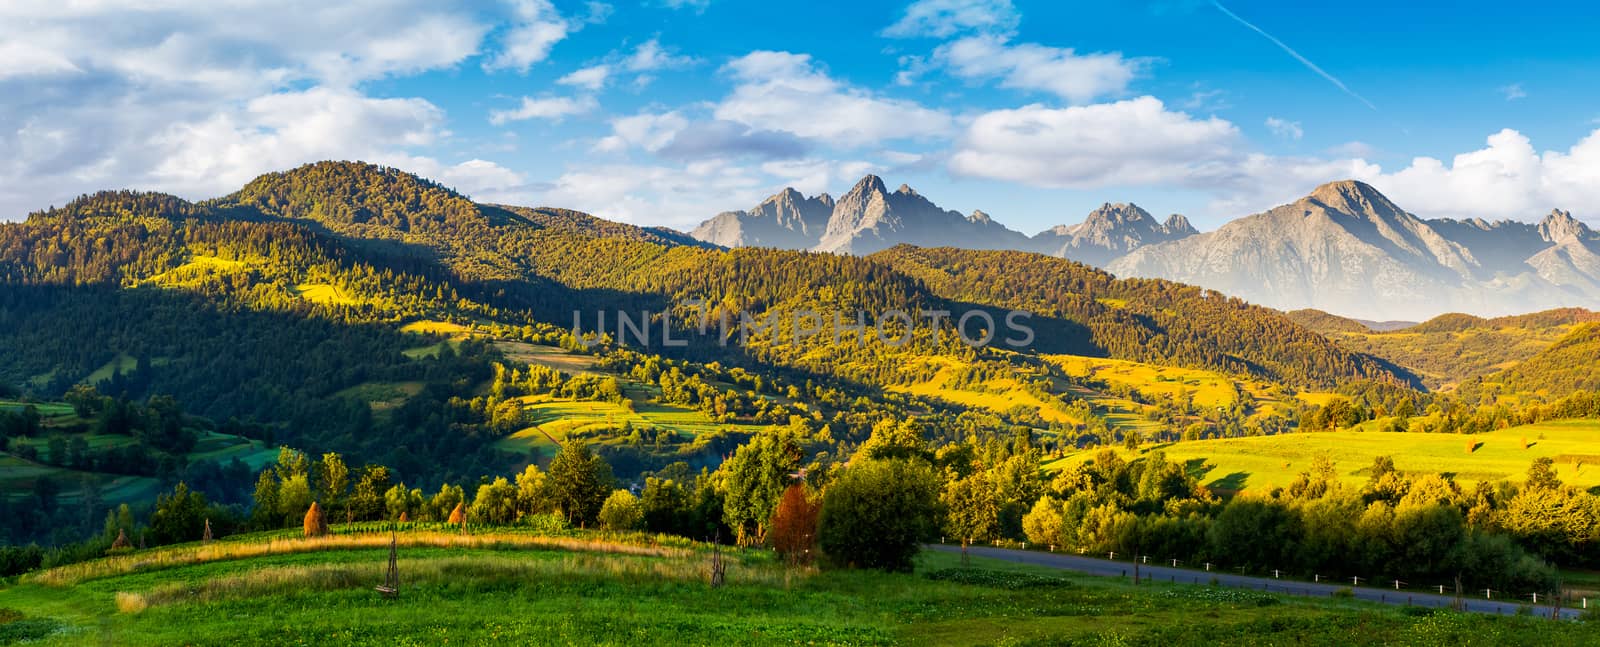 mountainous panorama of countryside at sunrise by Pellinni